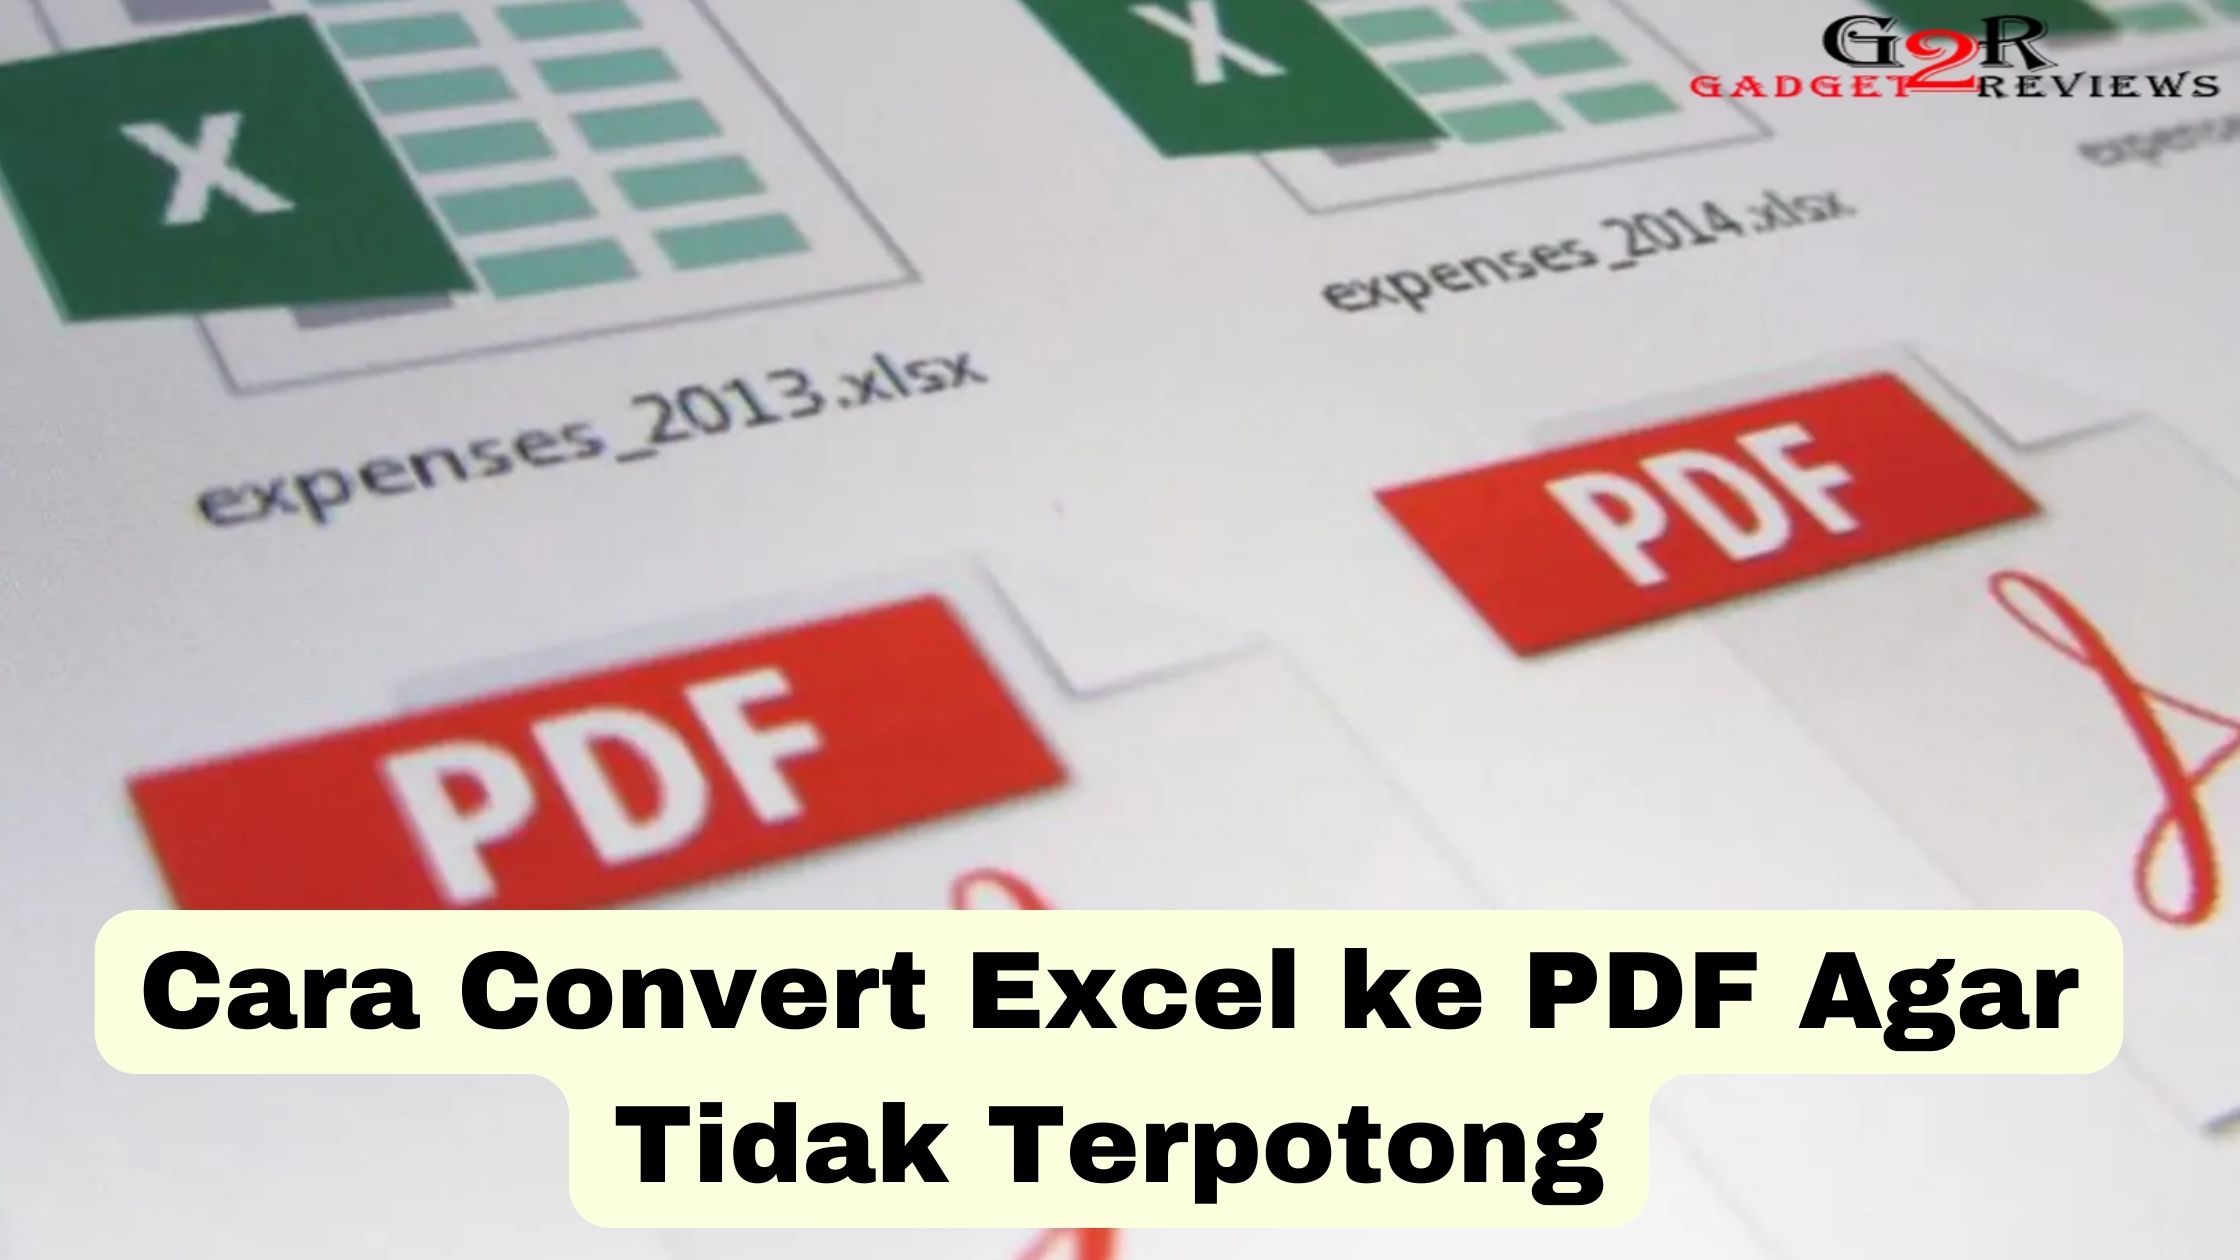 Cara Convert Excel ke PDF Agar Tidak Terpotong